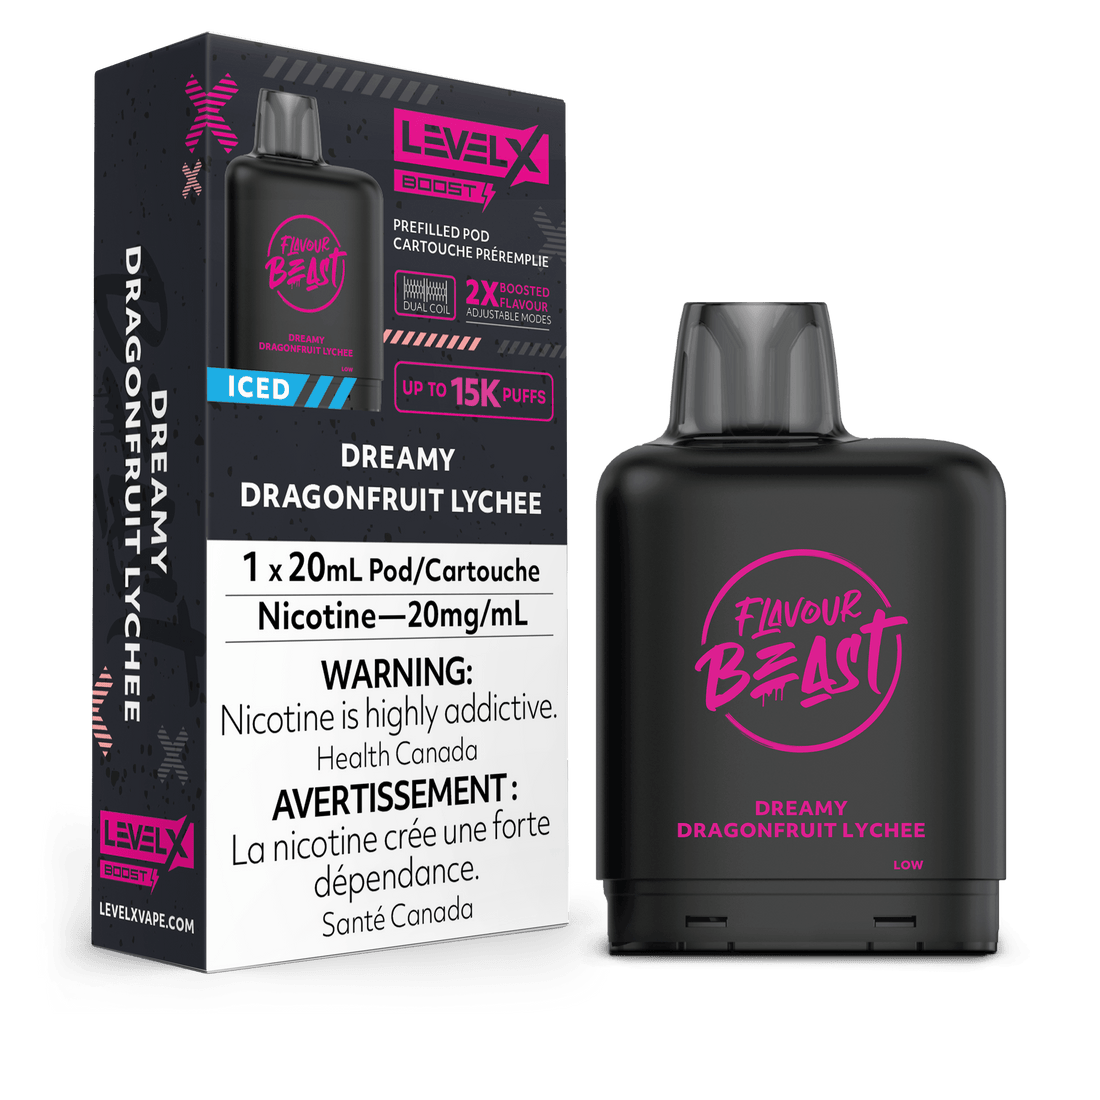 Level X Boost Flavour Beast - Dreamy Dragonfruit Lychee Iced - Vapor Shoppe